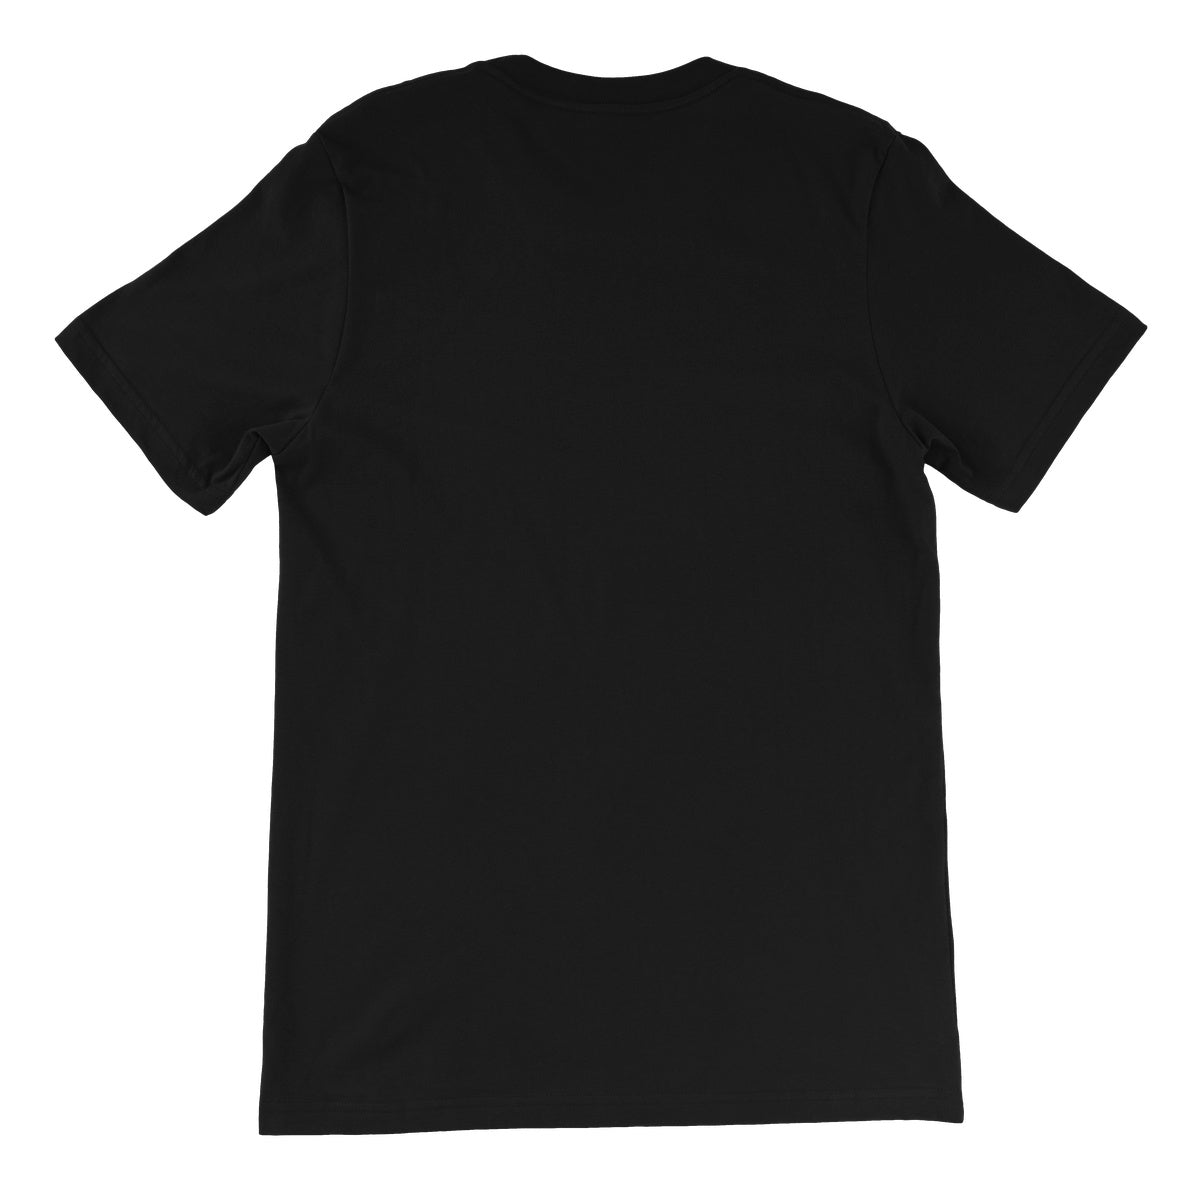 Let's Wrestle Irish Wrestling Unisex Short Sleeve T-Shirt